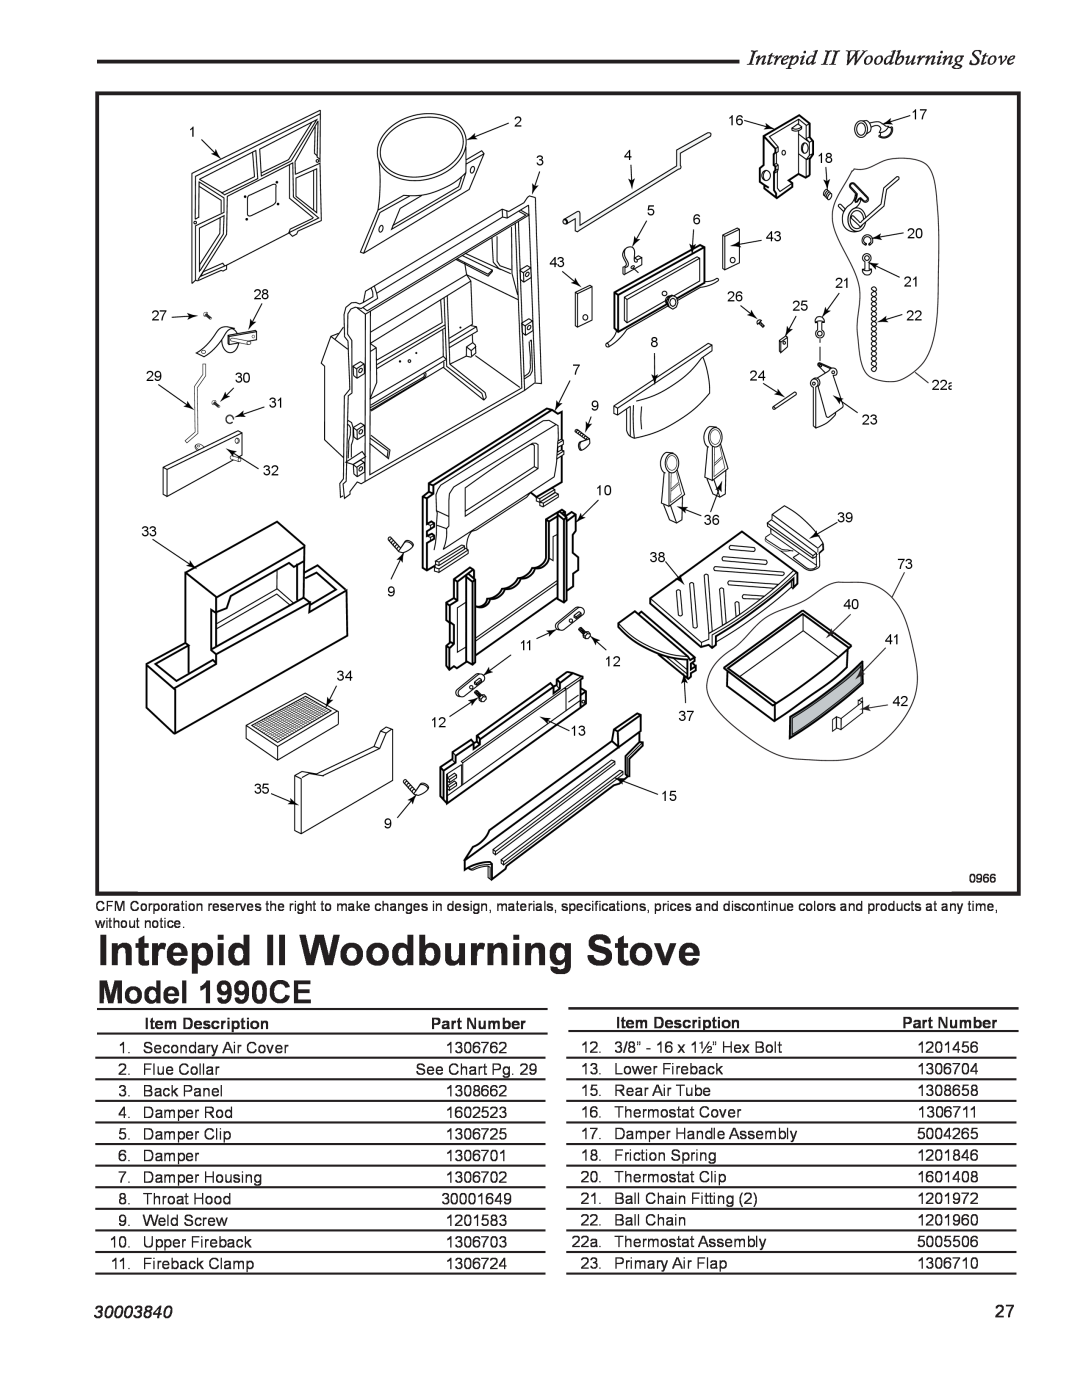 Vermont Casting Intrepid II Woodburning Stove, Model 1990CE, 30003840, Item Description, Part Number 